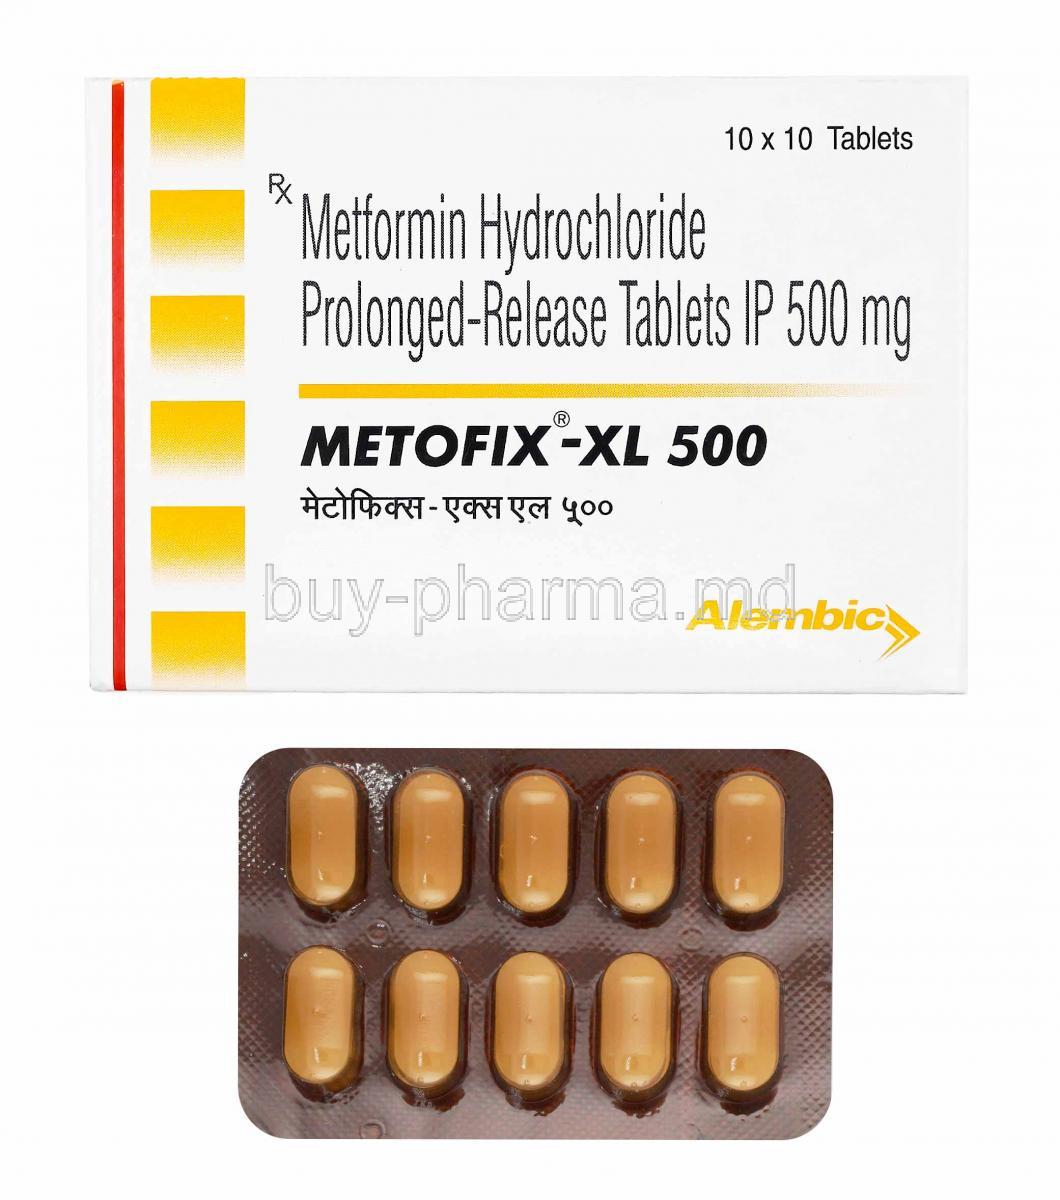 Metofix-XL, Metformin 500mg box and tablets